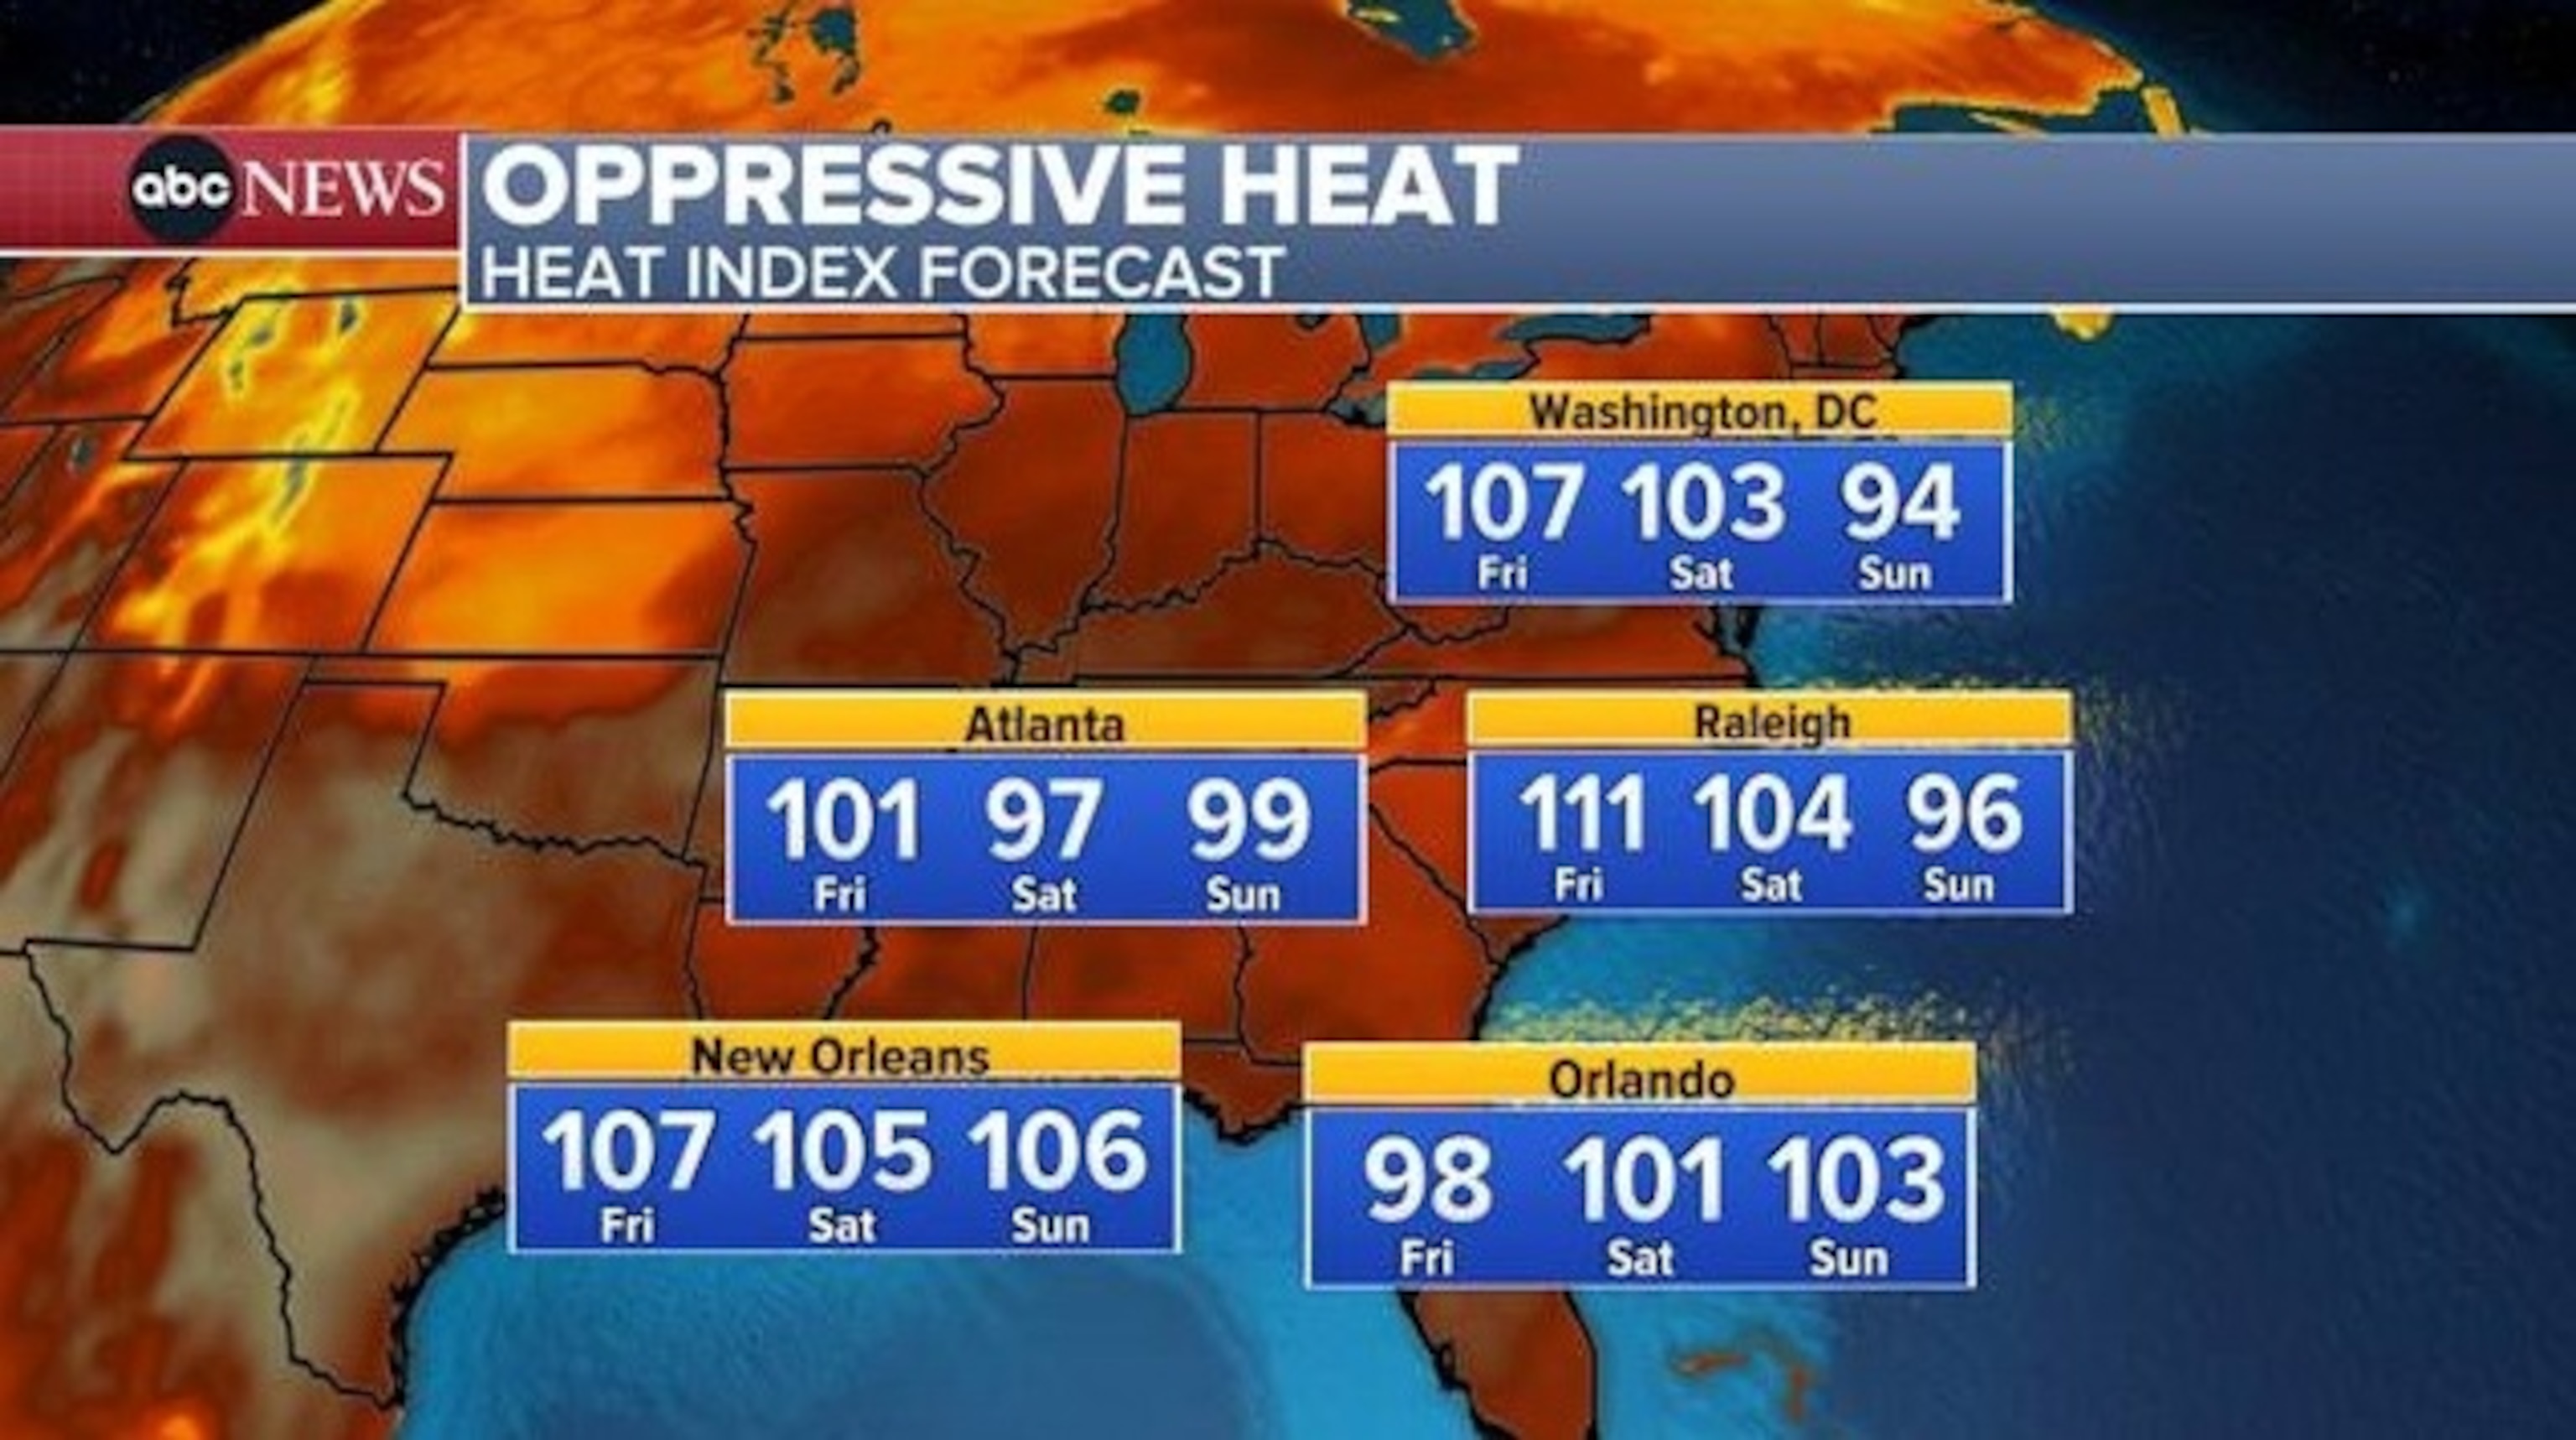 PHOTO: Oppressive heat map